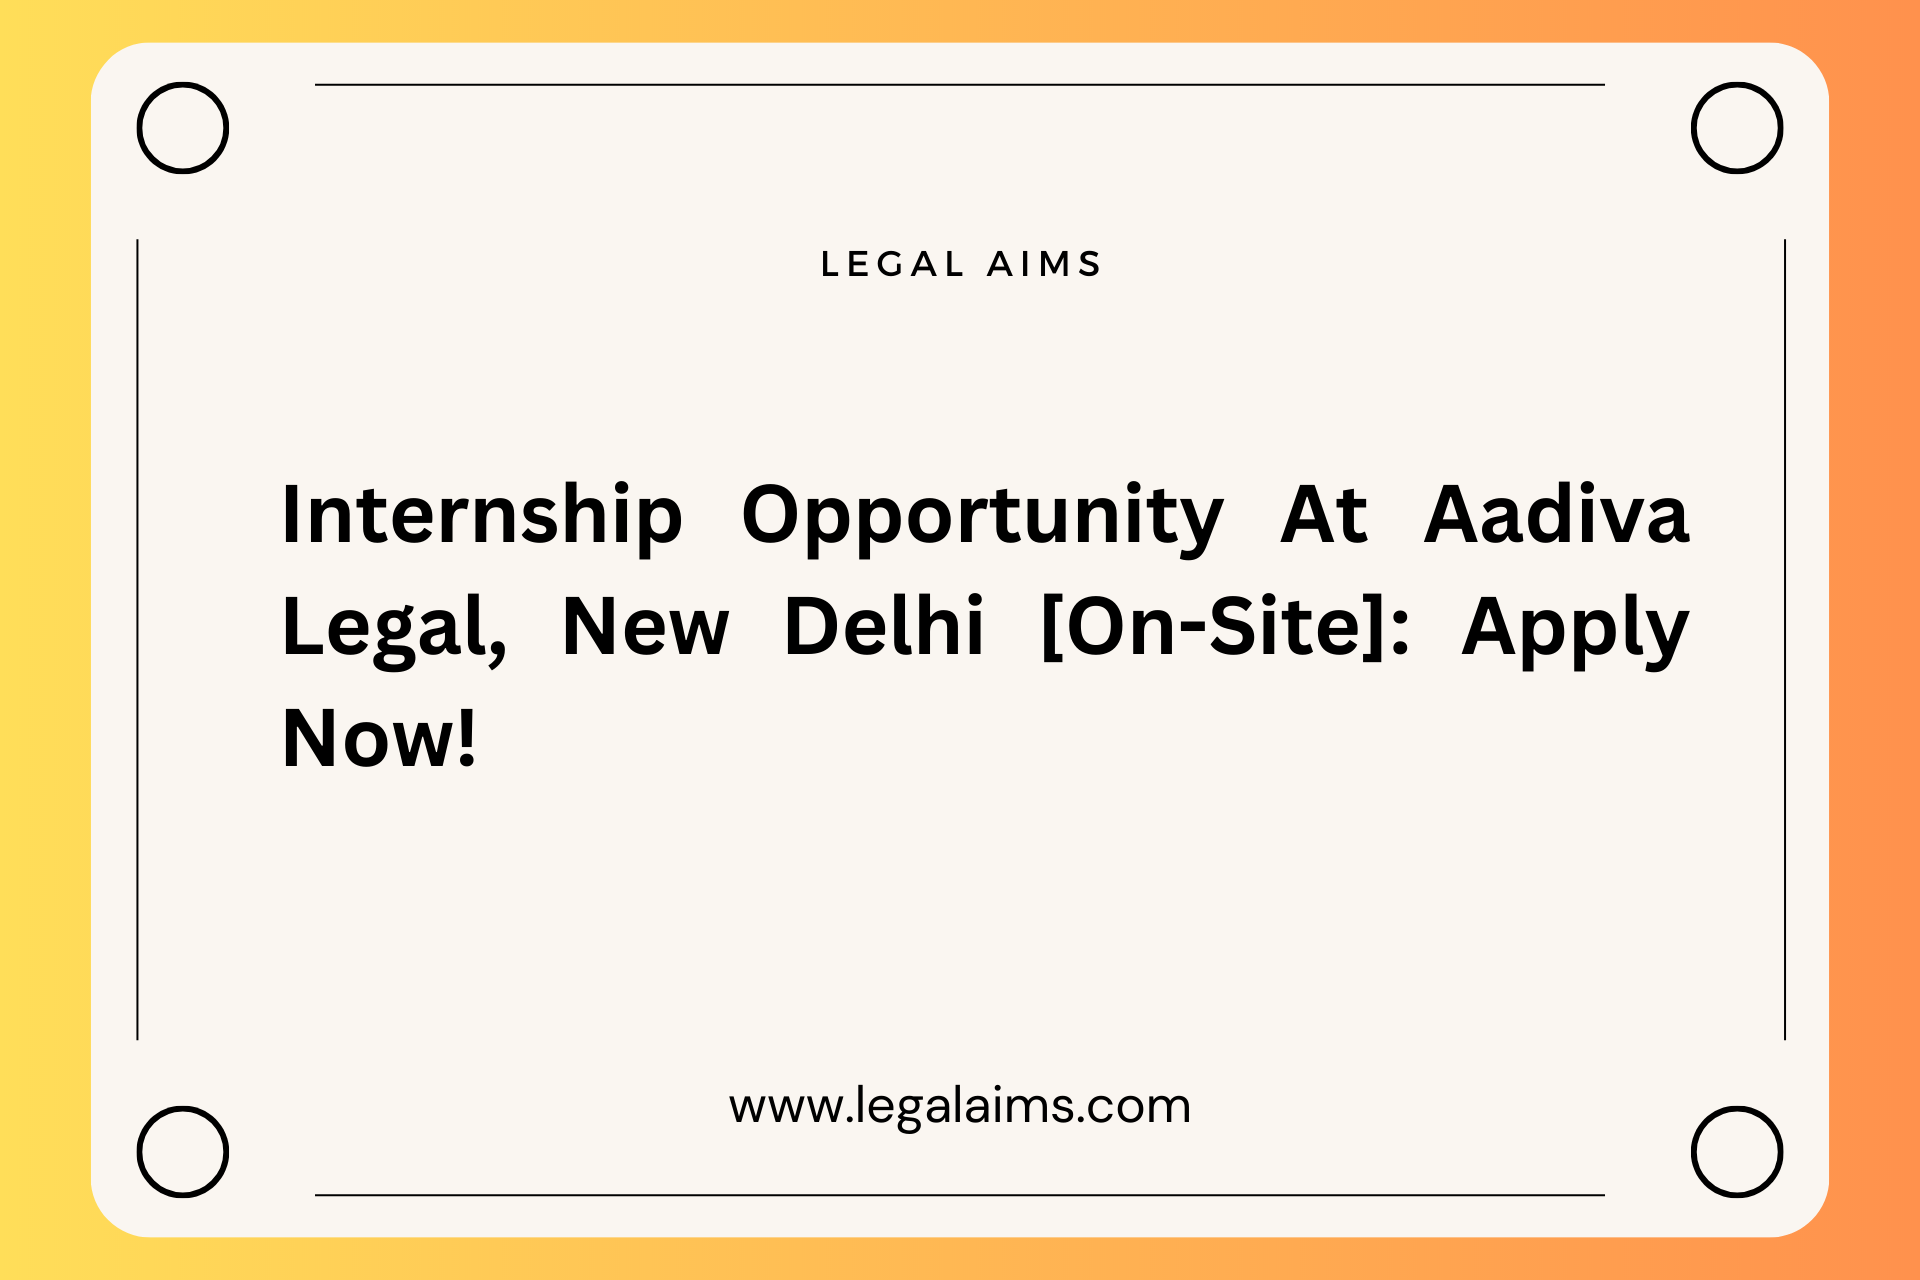 Internship Opportunity At Aadiva Legal, New Delhi [On-Site]: Apply Now!